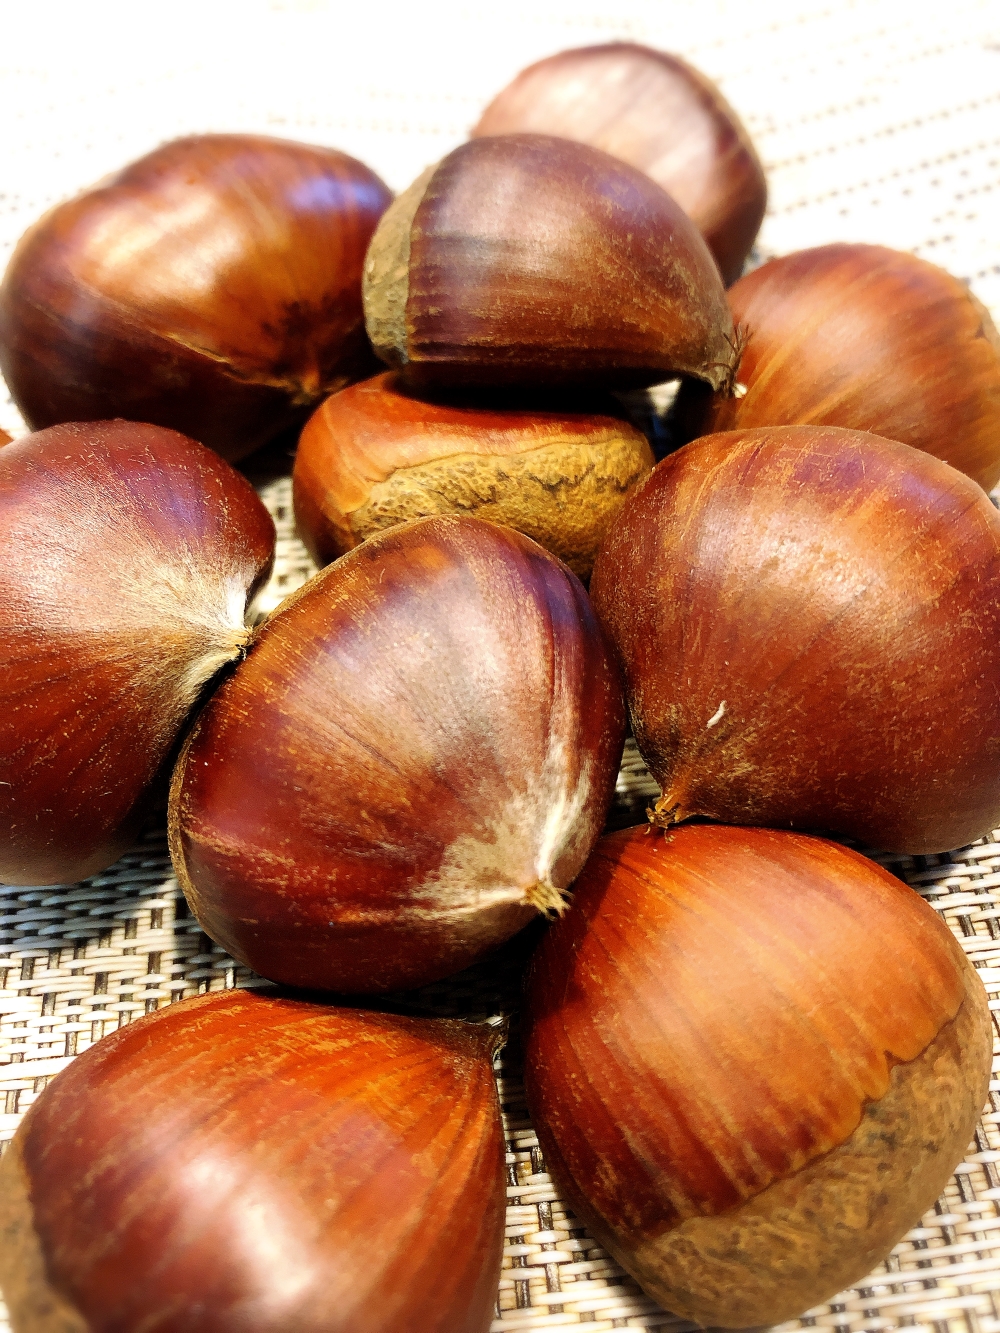 Speaking of autumn, chestnuts!